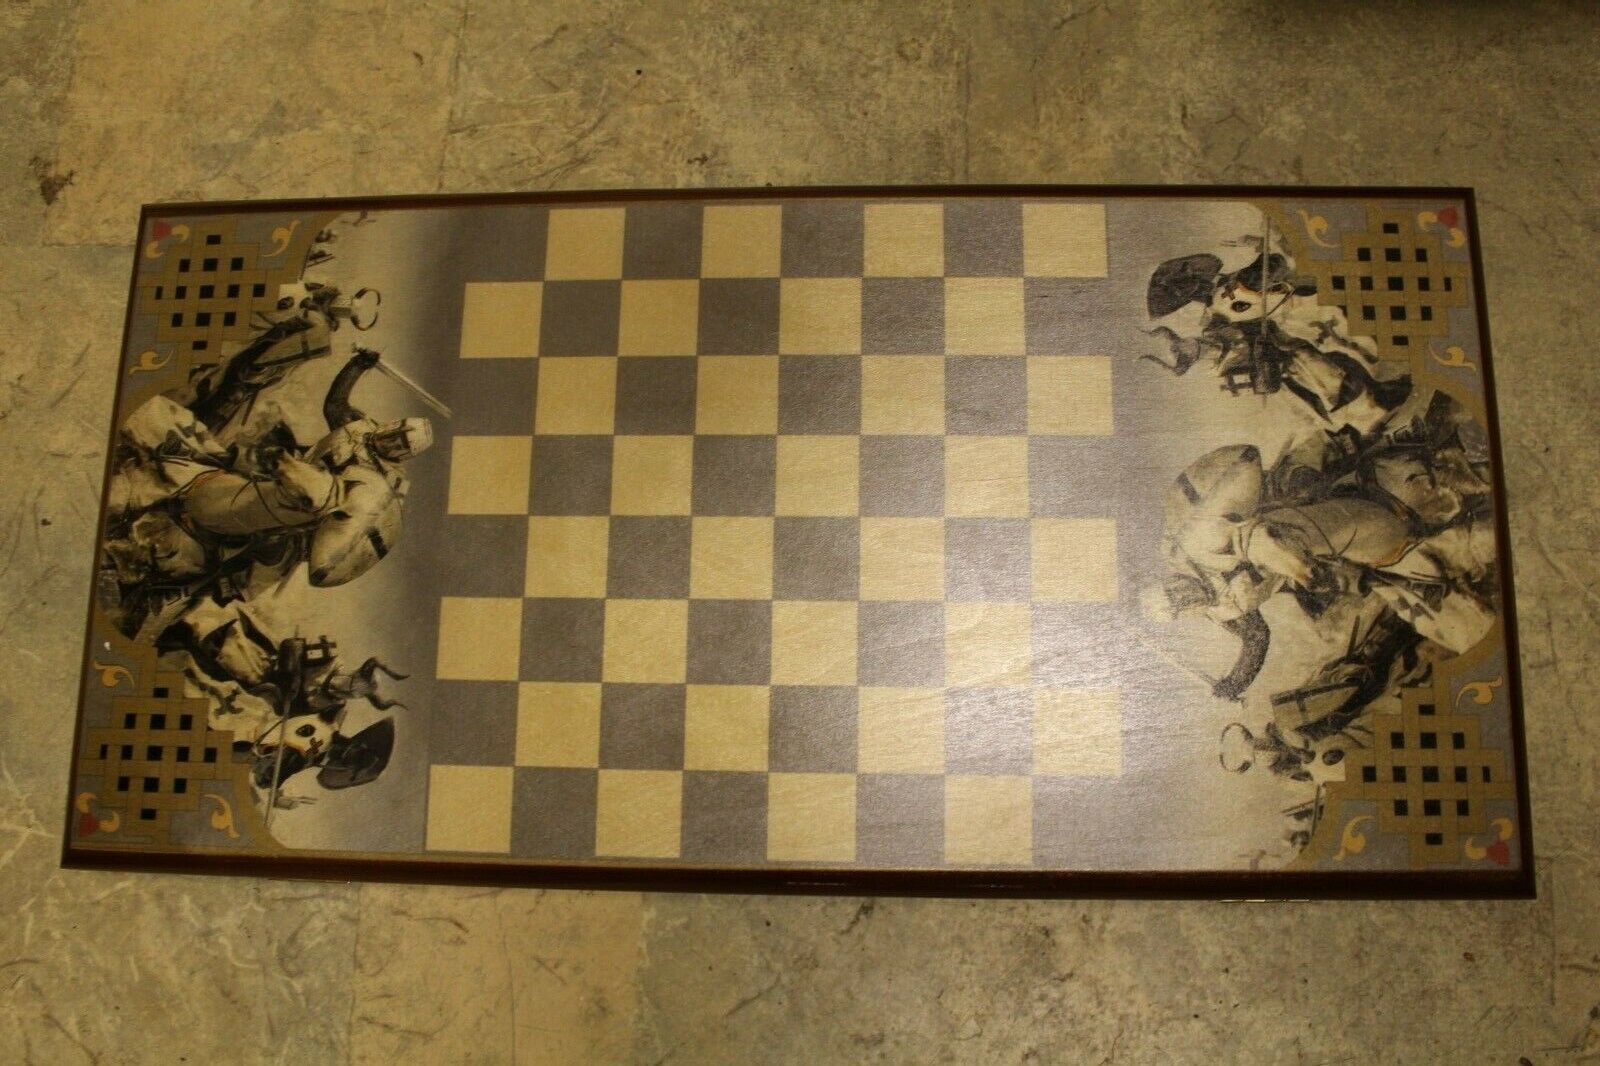 11451.Russian Checkers / Backgammon Set 'Crusaders'